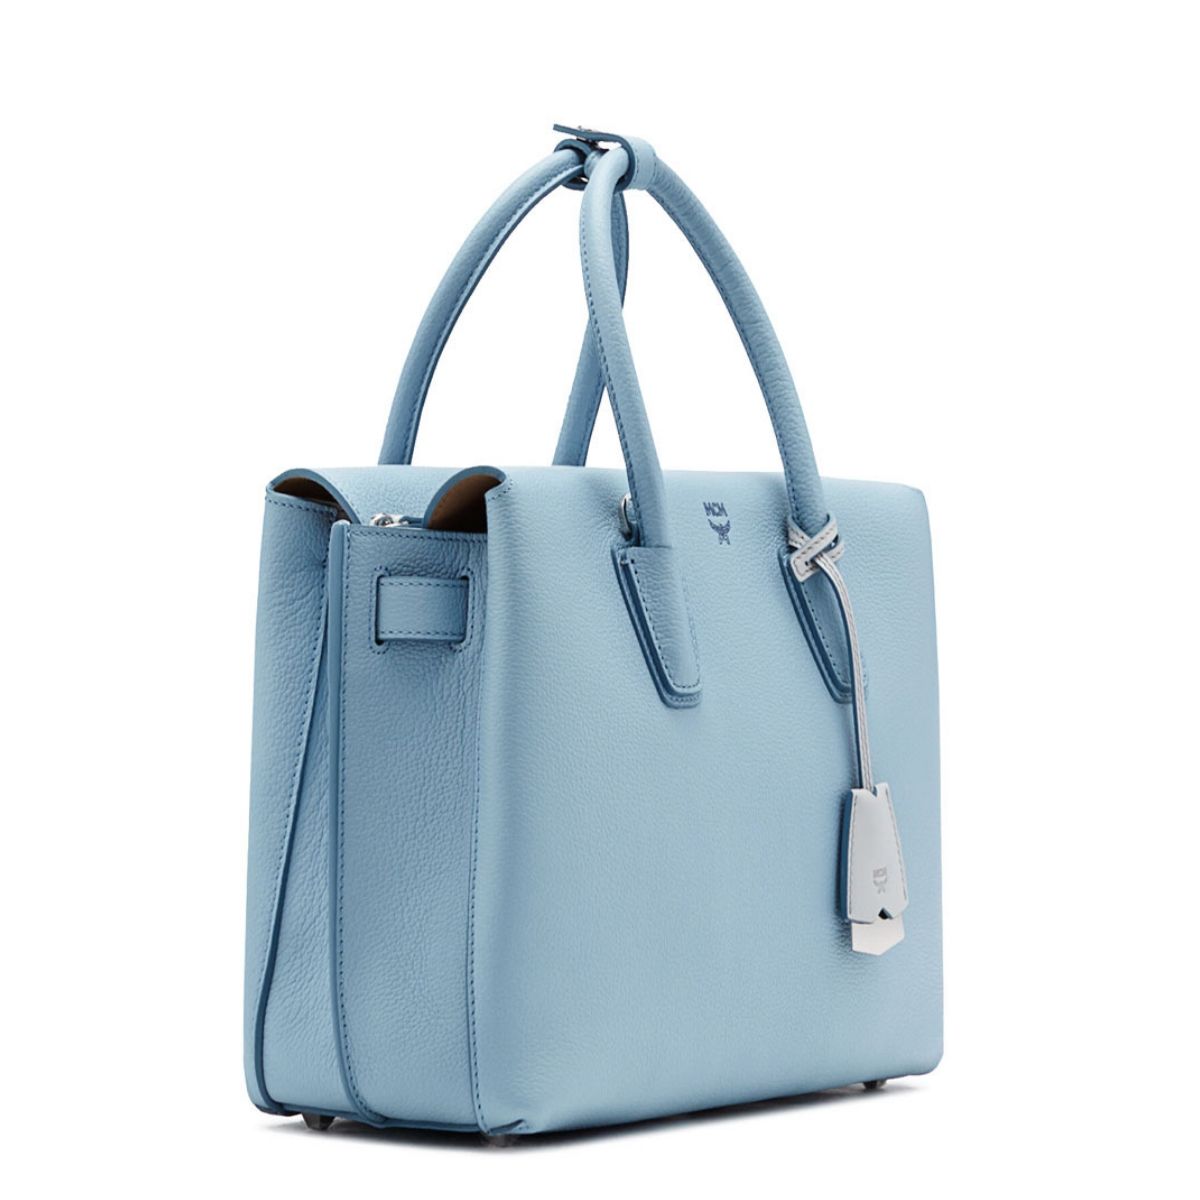 Milla Medium Leather Sky Blue Tote Bag